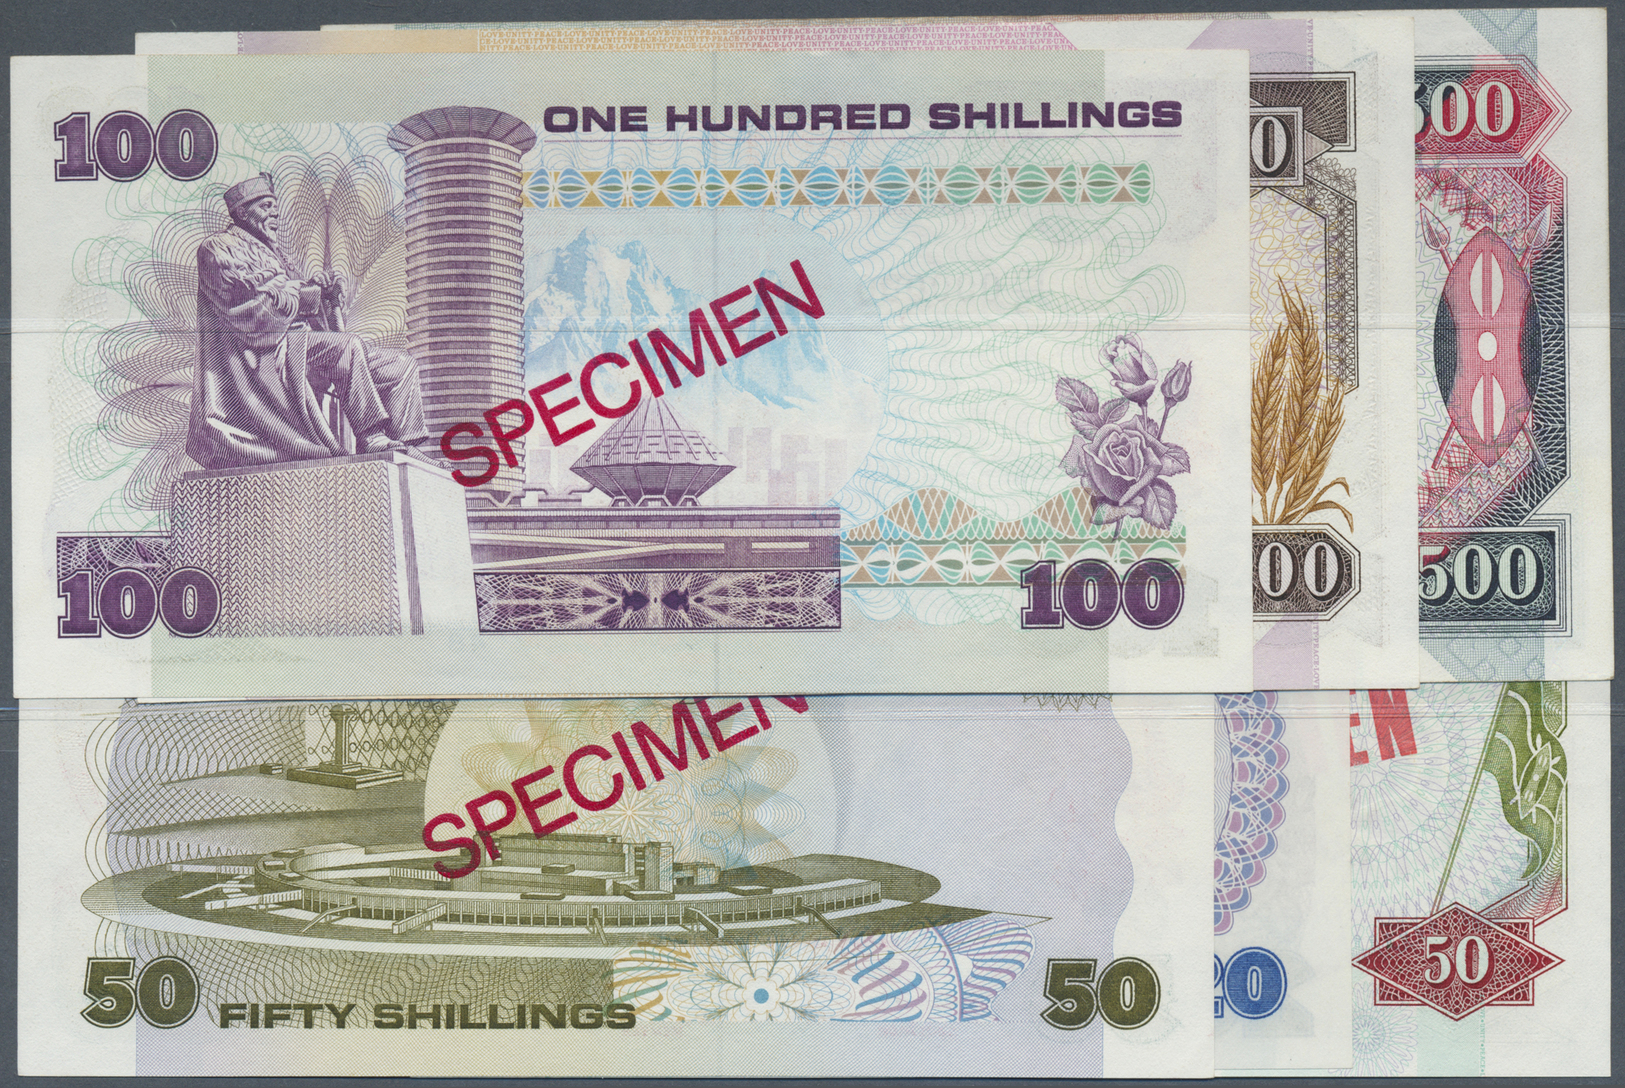 01349 Kenya / Kenia: Set Of 6 Different Specimen Banknotes Containing 20 Shillings 1981, 50 Shillings 1988, 100 Shilling - Kenya